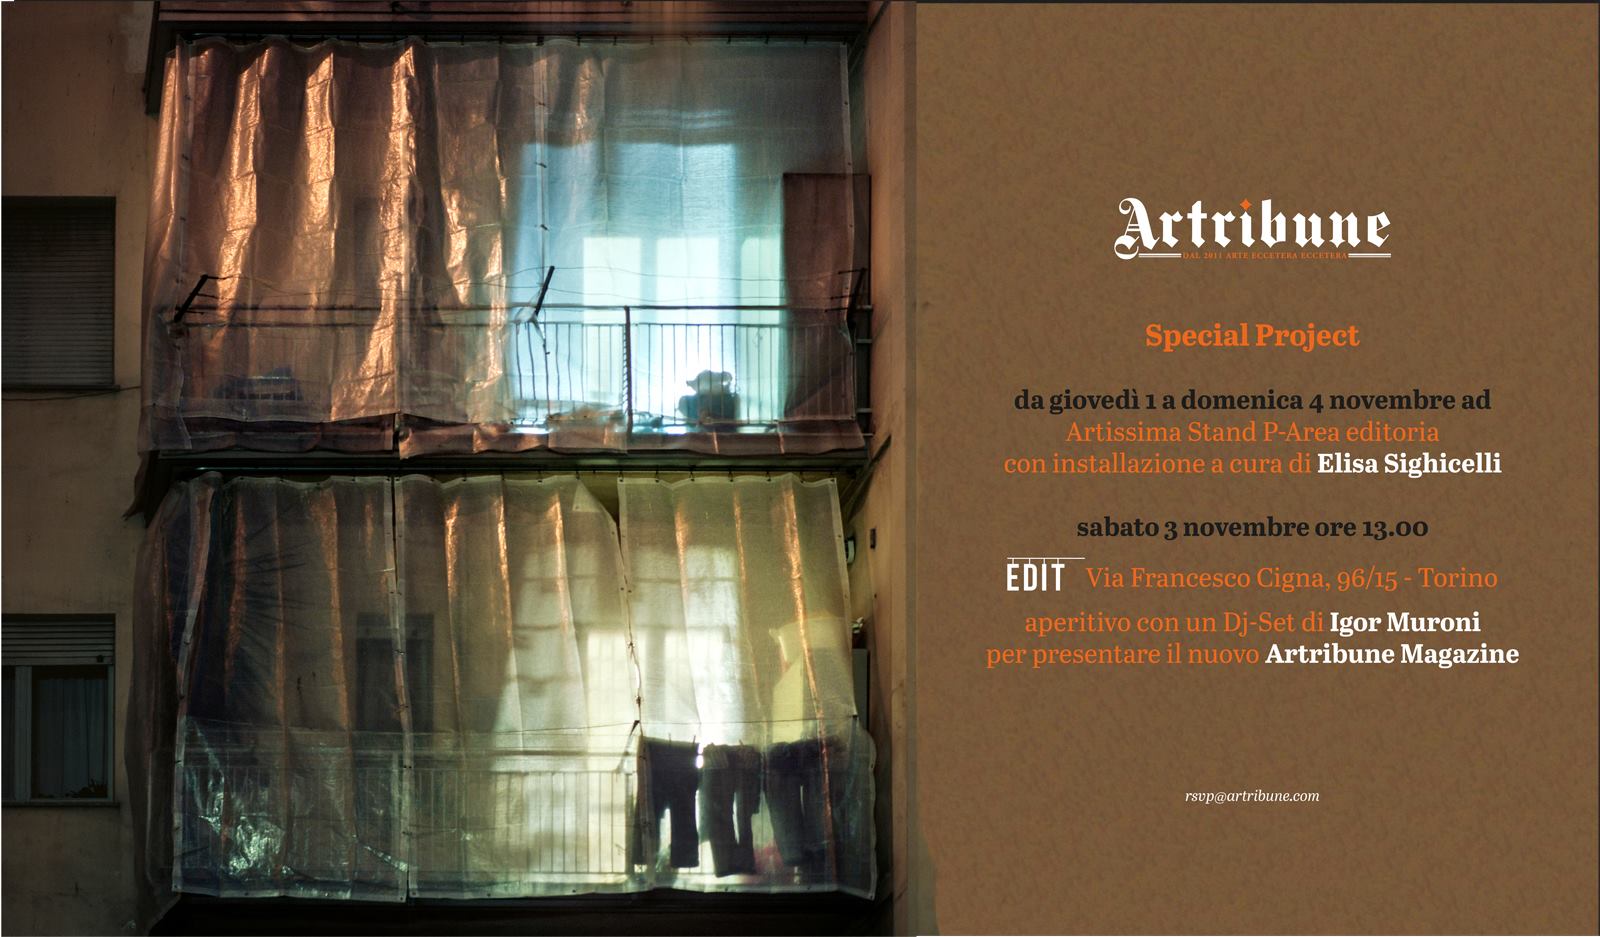 Artribune - Special Project